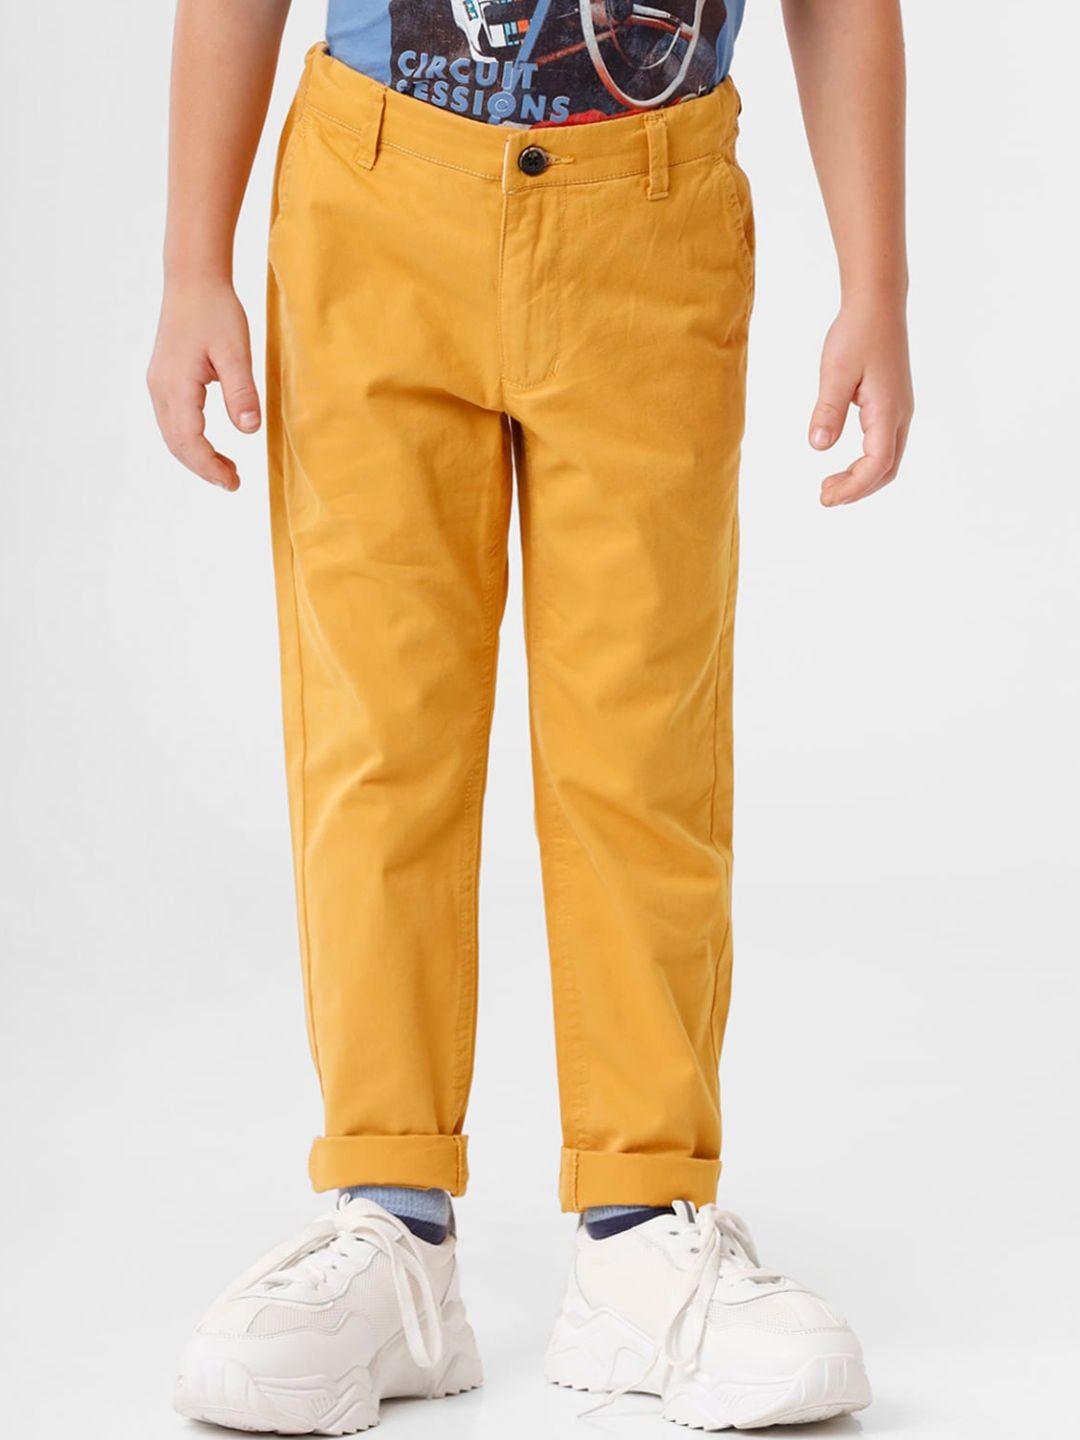 kate & oscar boys mustard yellow cotton chinos trousers